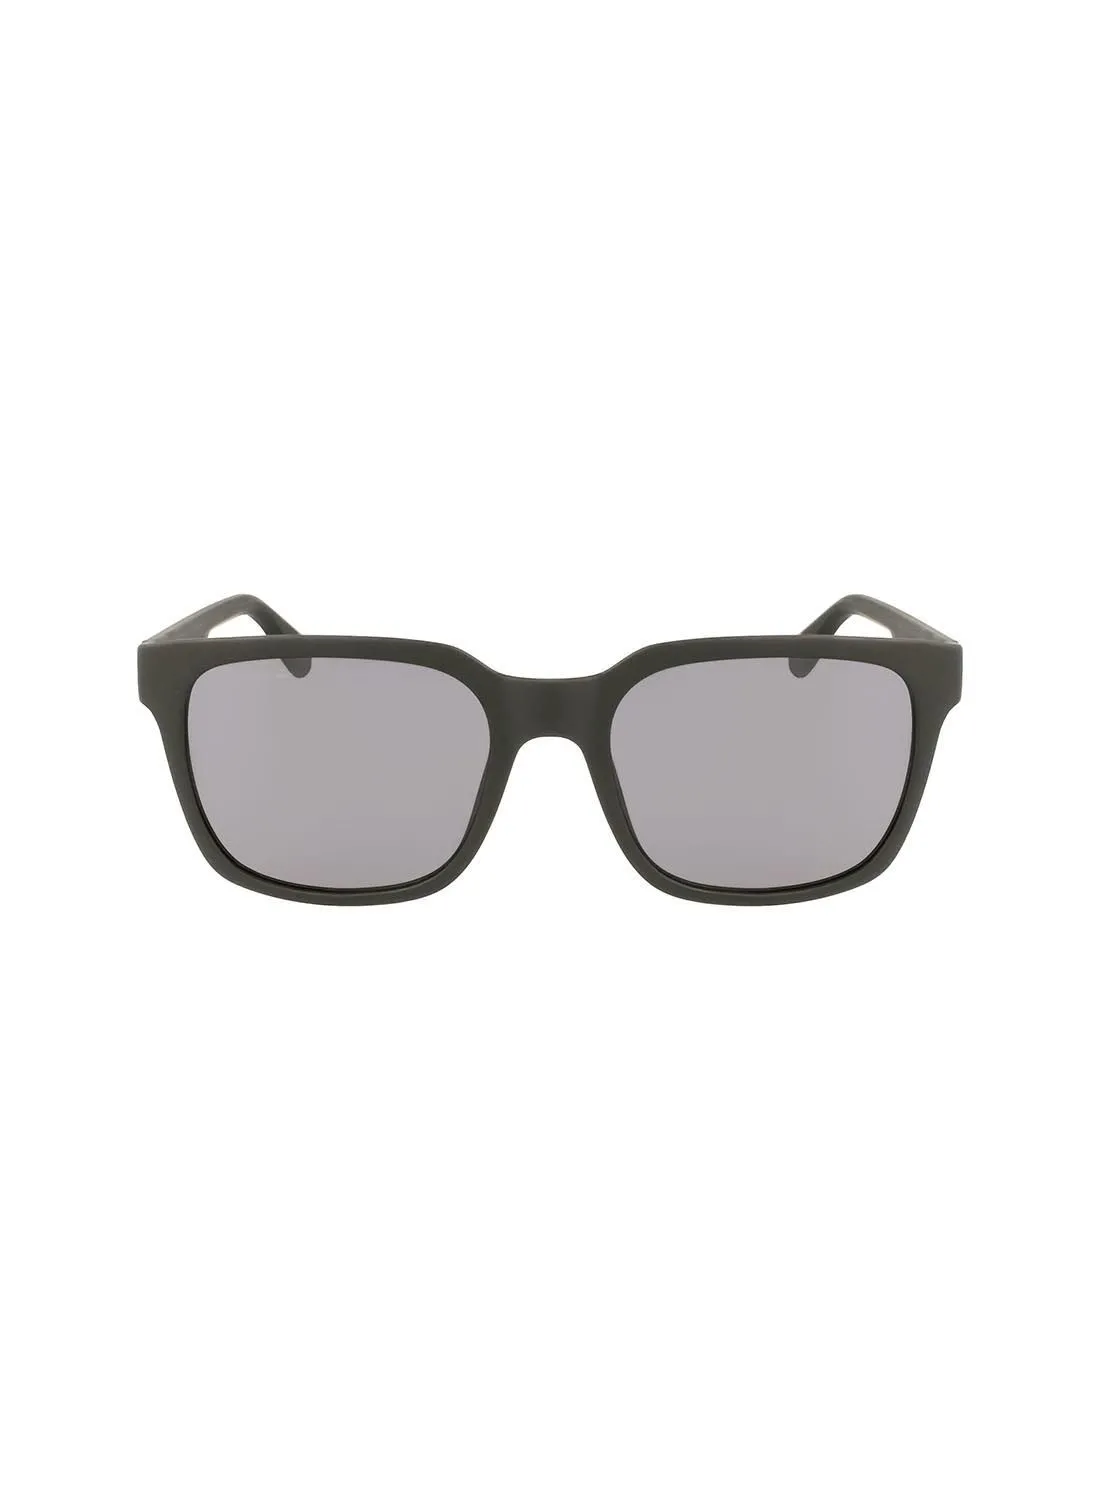 LACOSTE UV Rays Protection Eyewear Sunglasses L967S-002-5519